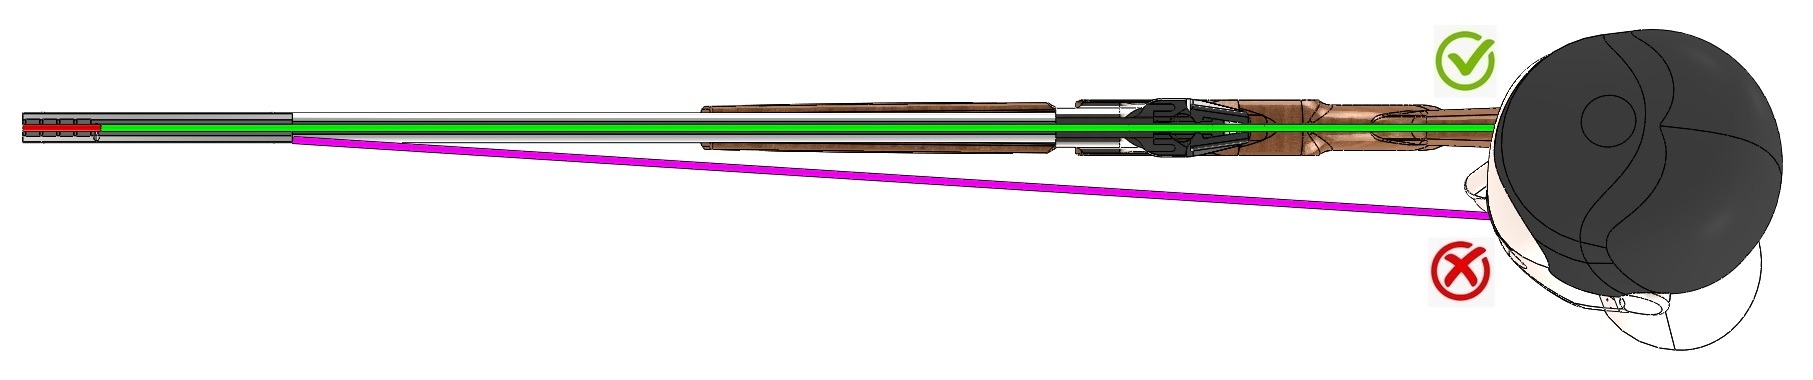 fibre optic shotgun sight illustration 004